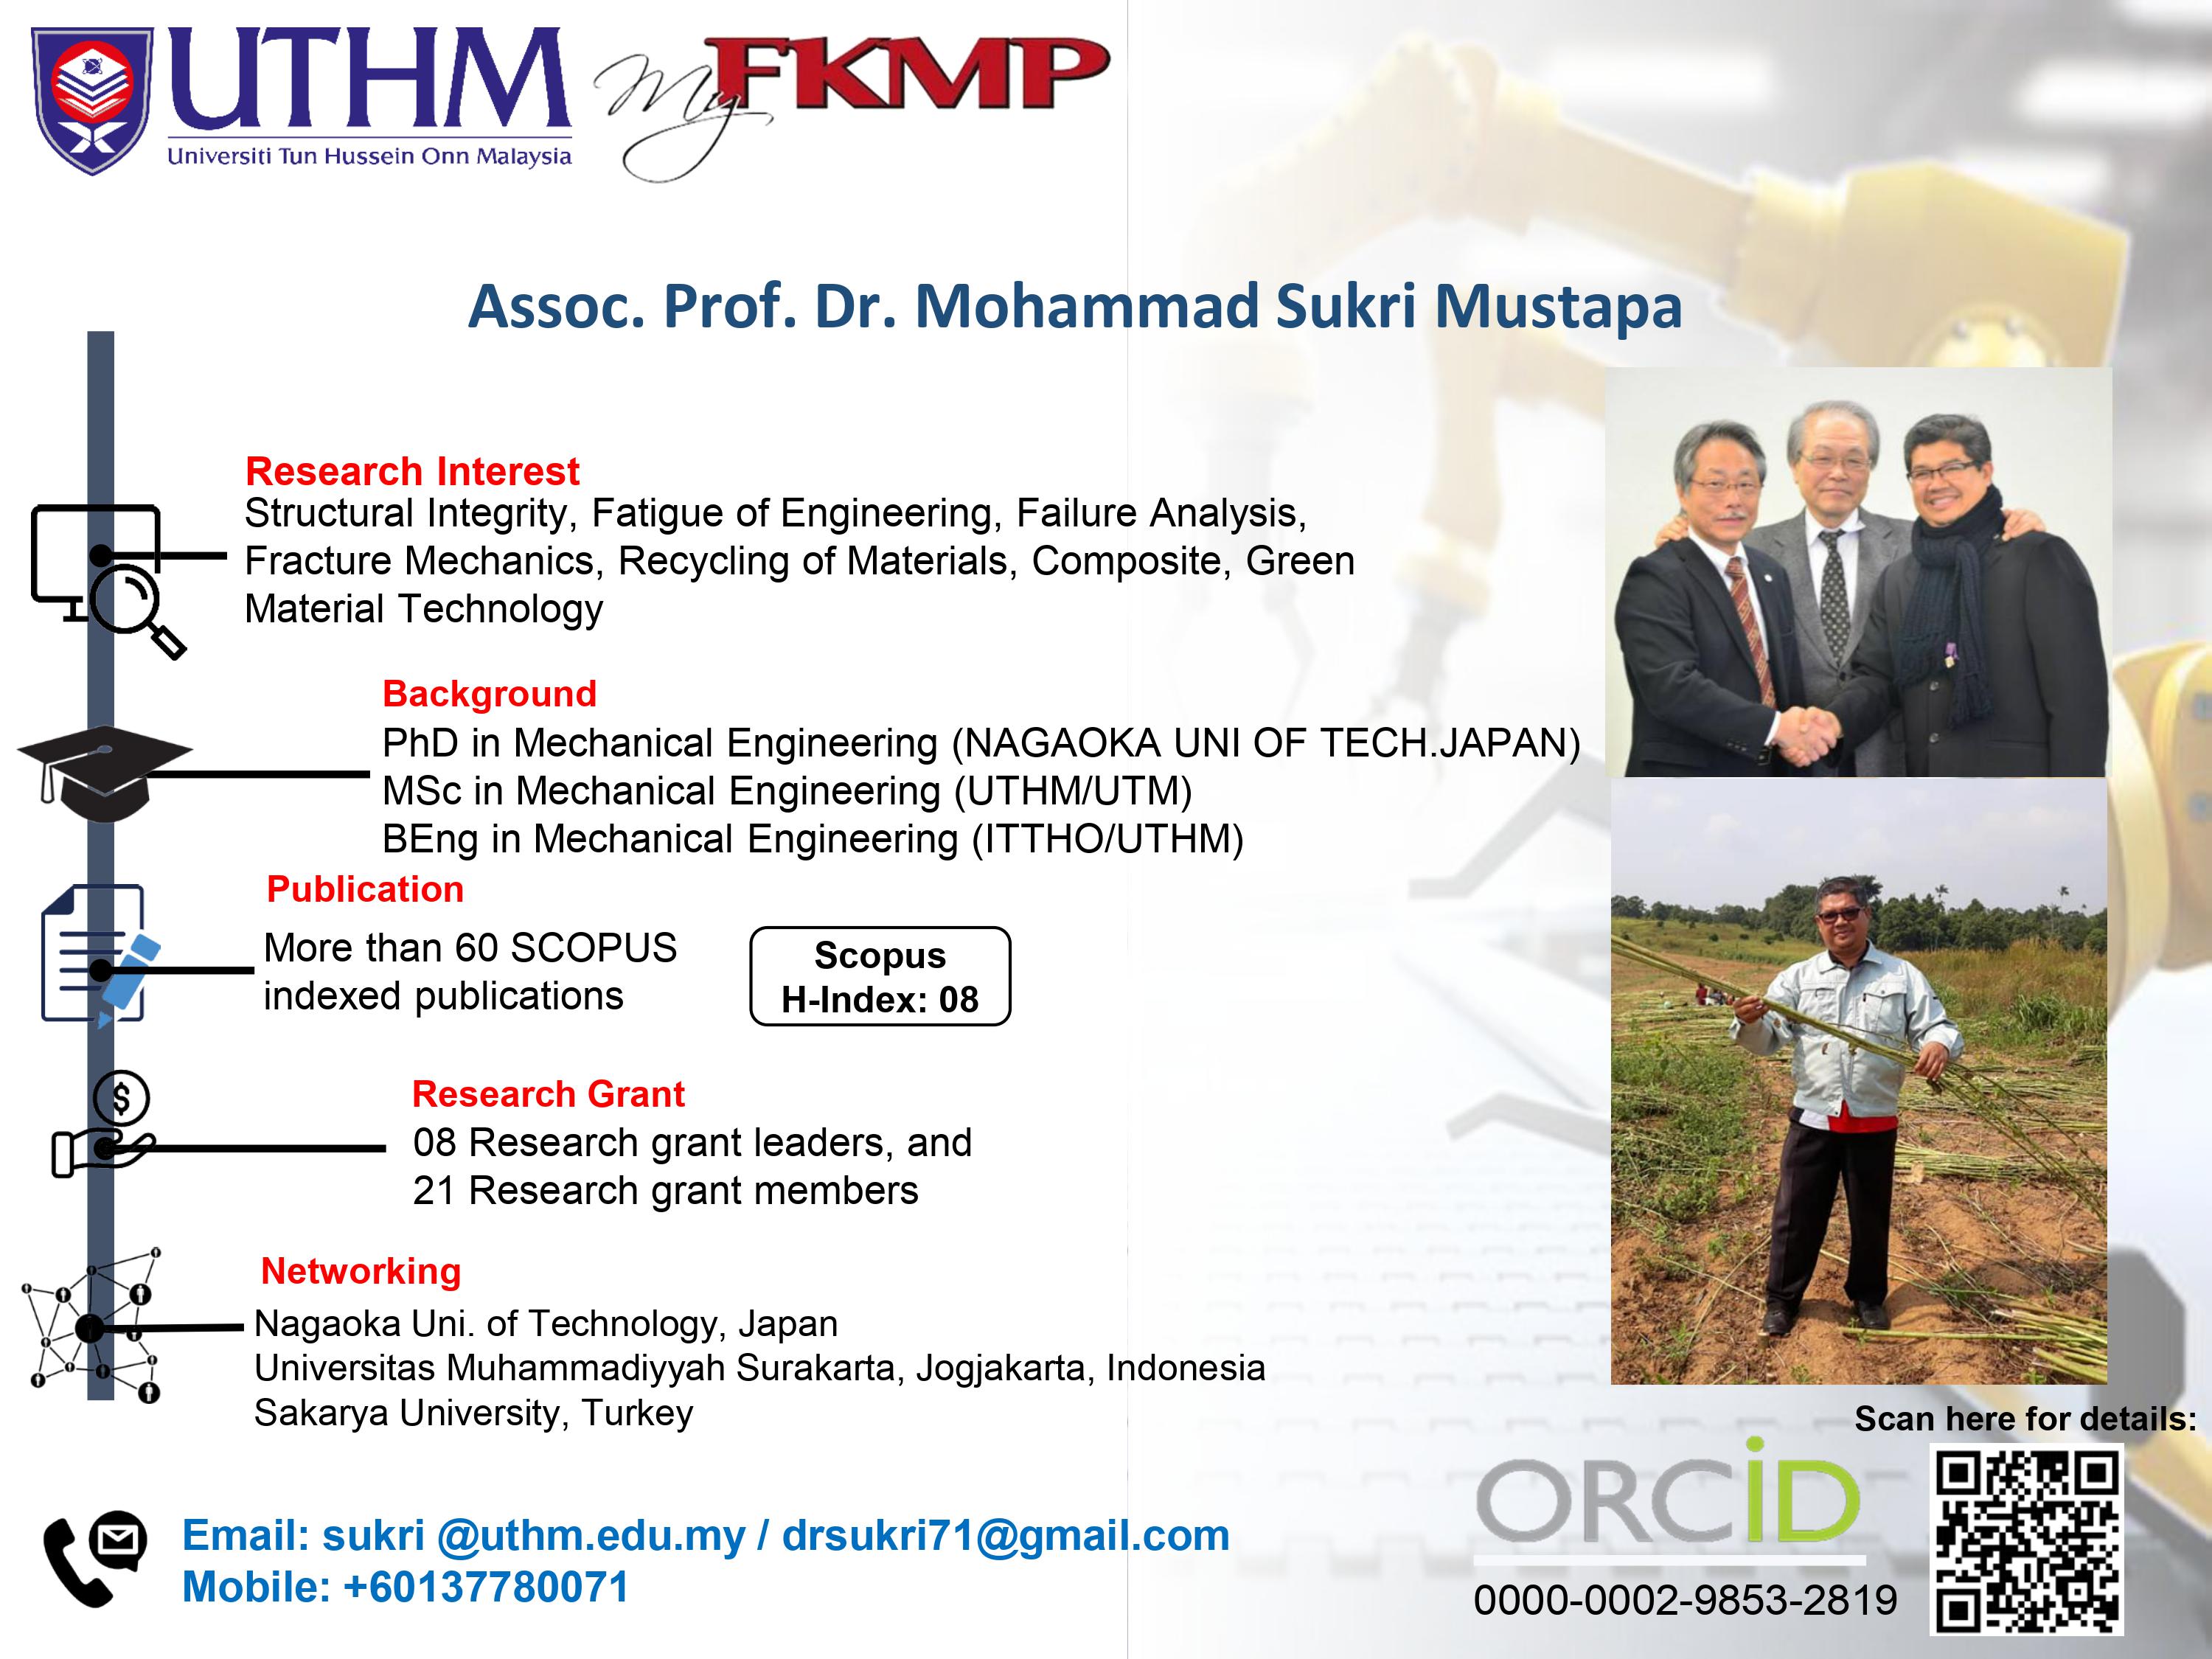 Assoc. Prof. Dr. Mohammad Sukri Mustapa